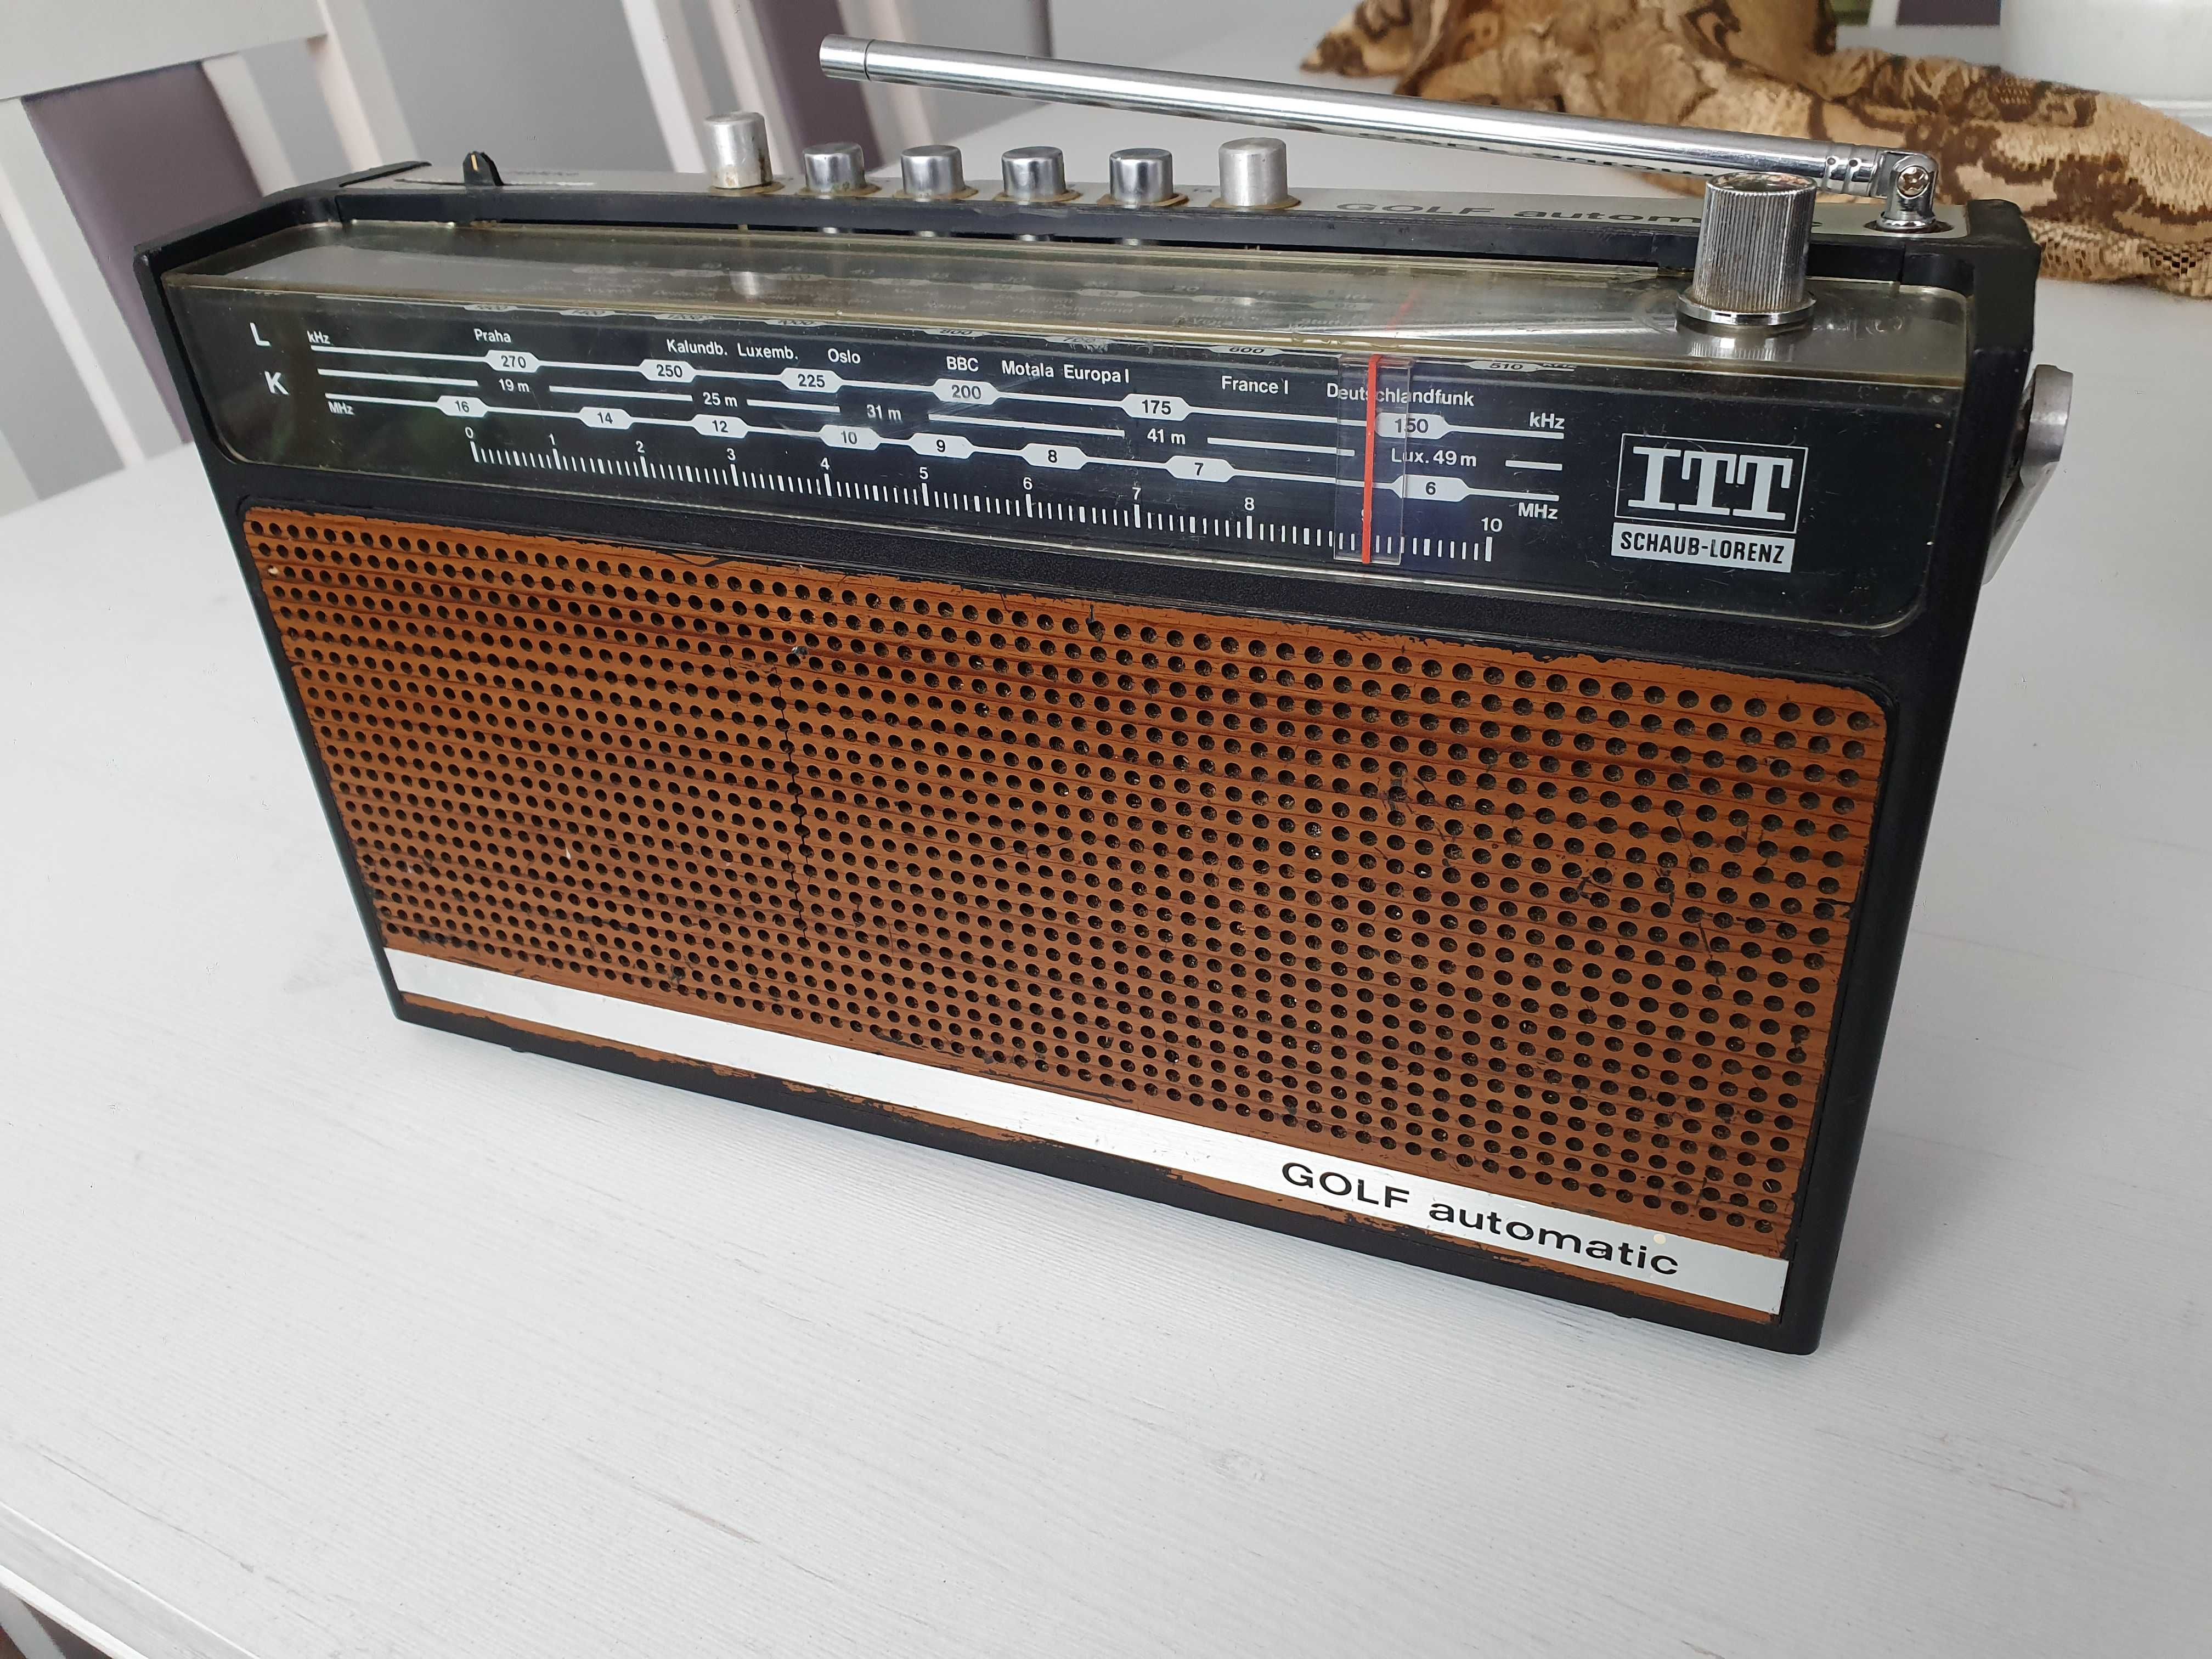 Stare zabytkowe radio ITT schaub-lorenz golf automatic vintage